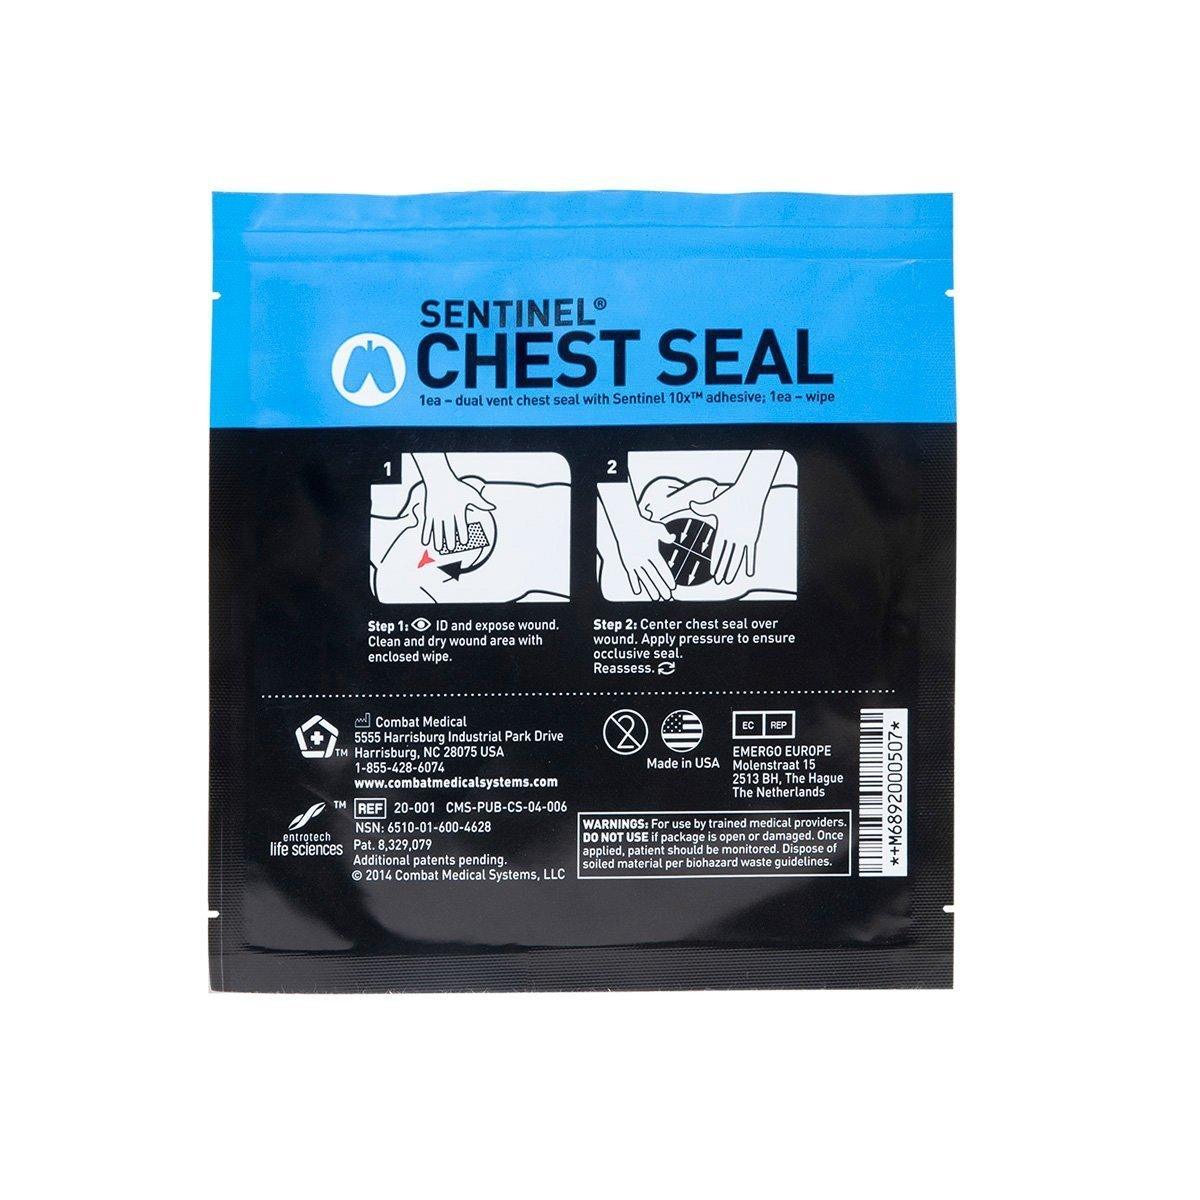 Sentinel Chest Seal - Vendor